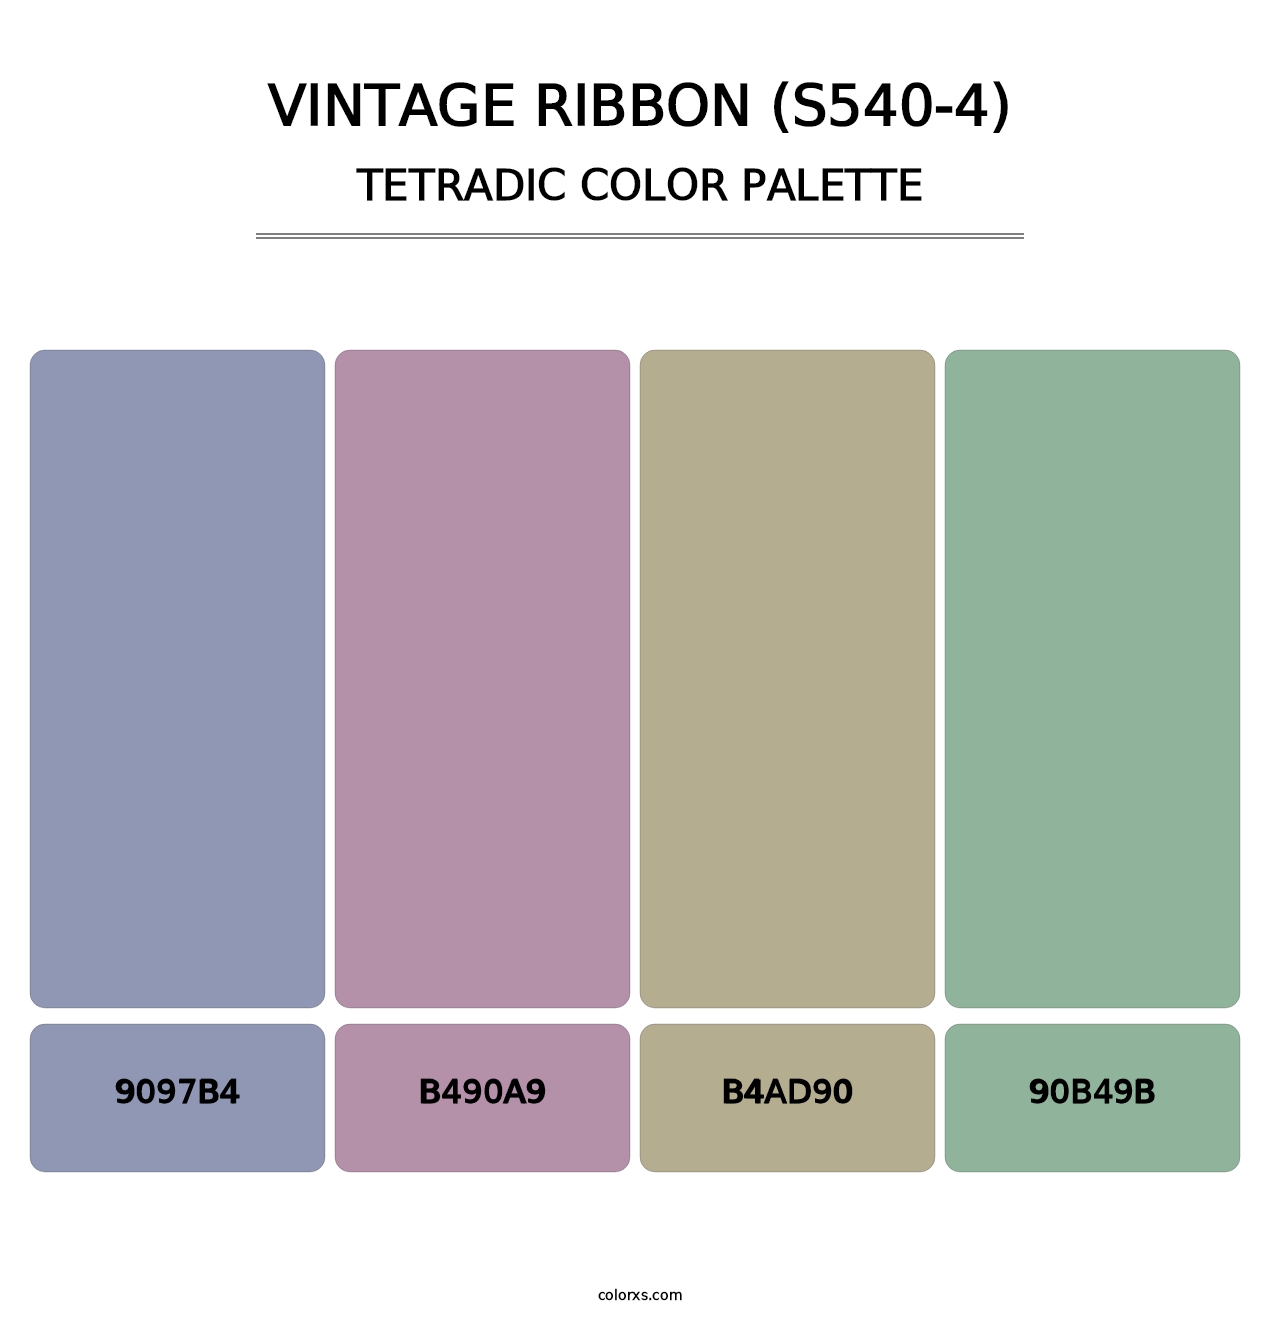 Vintage Ribbon (S540-4) - Tetradic Color Palette